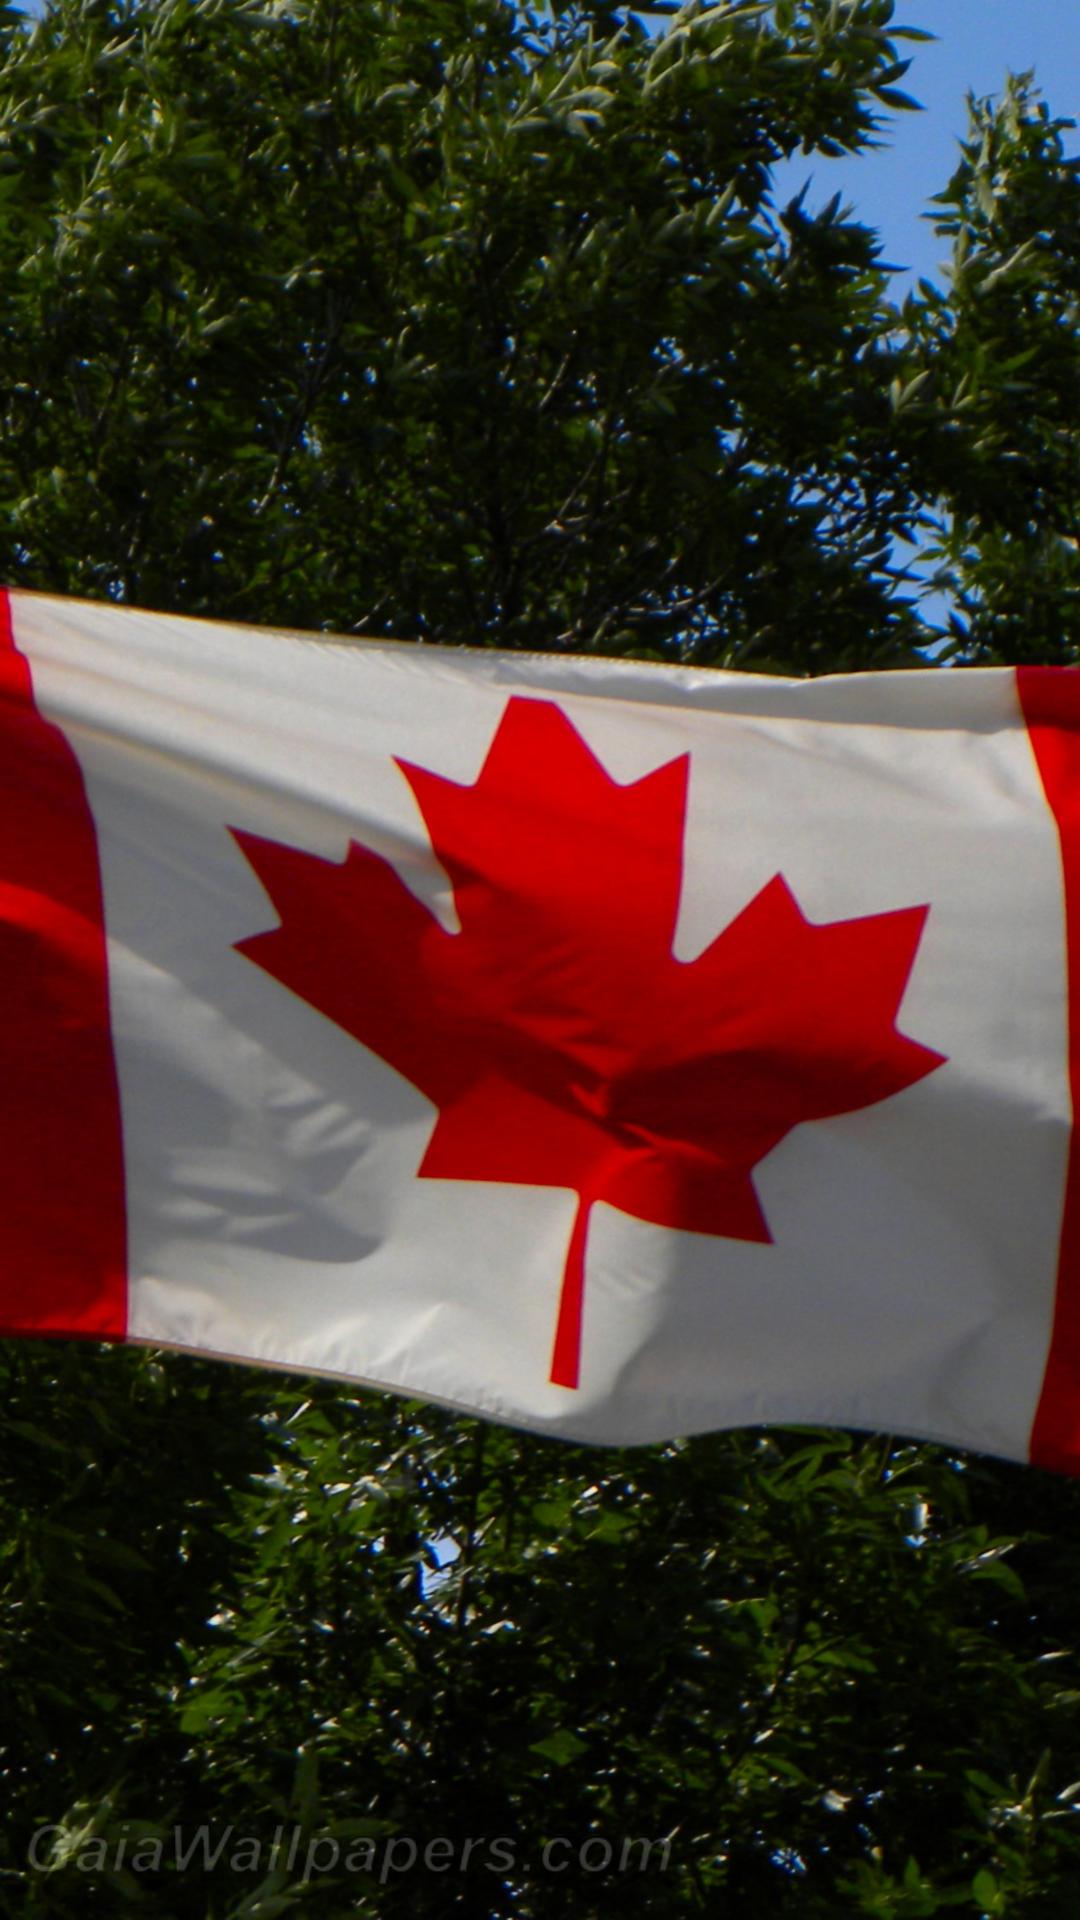 Flag of Canada - Free desktop wallpapers